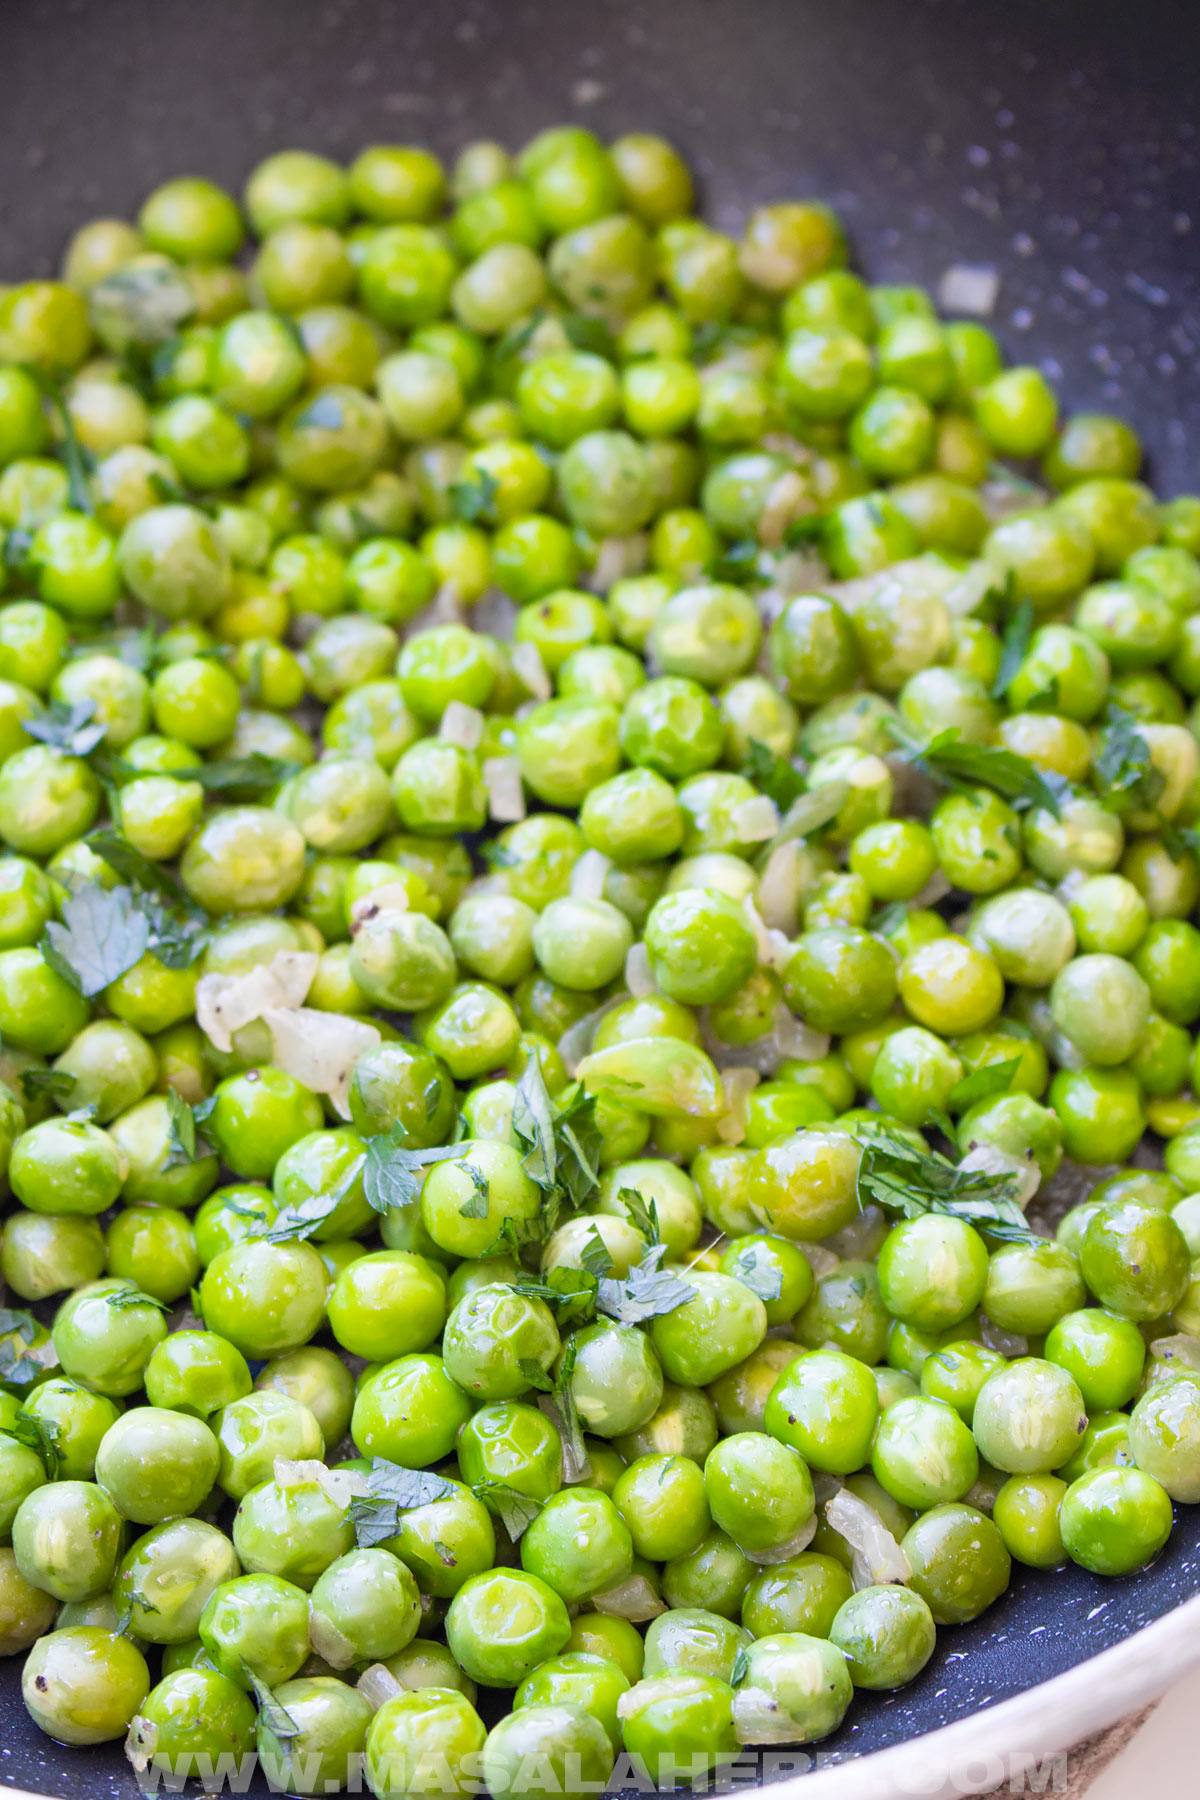 Buttered green peas